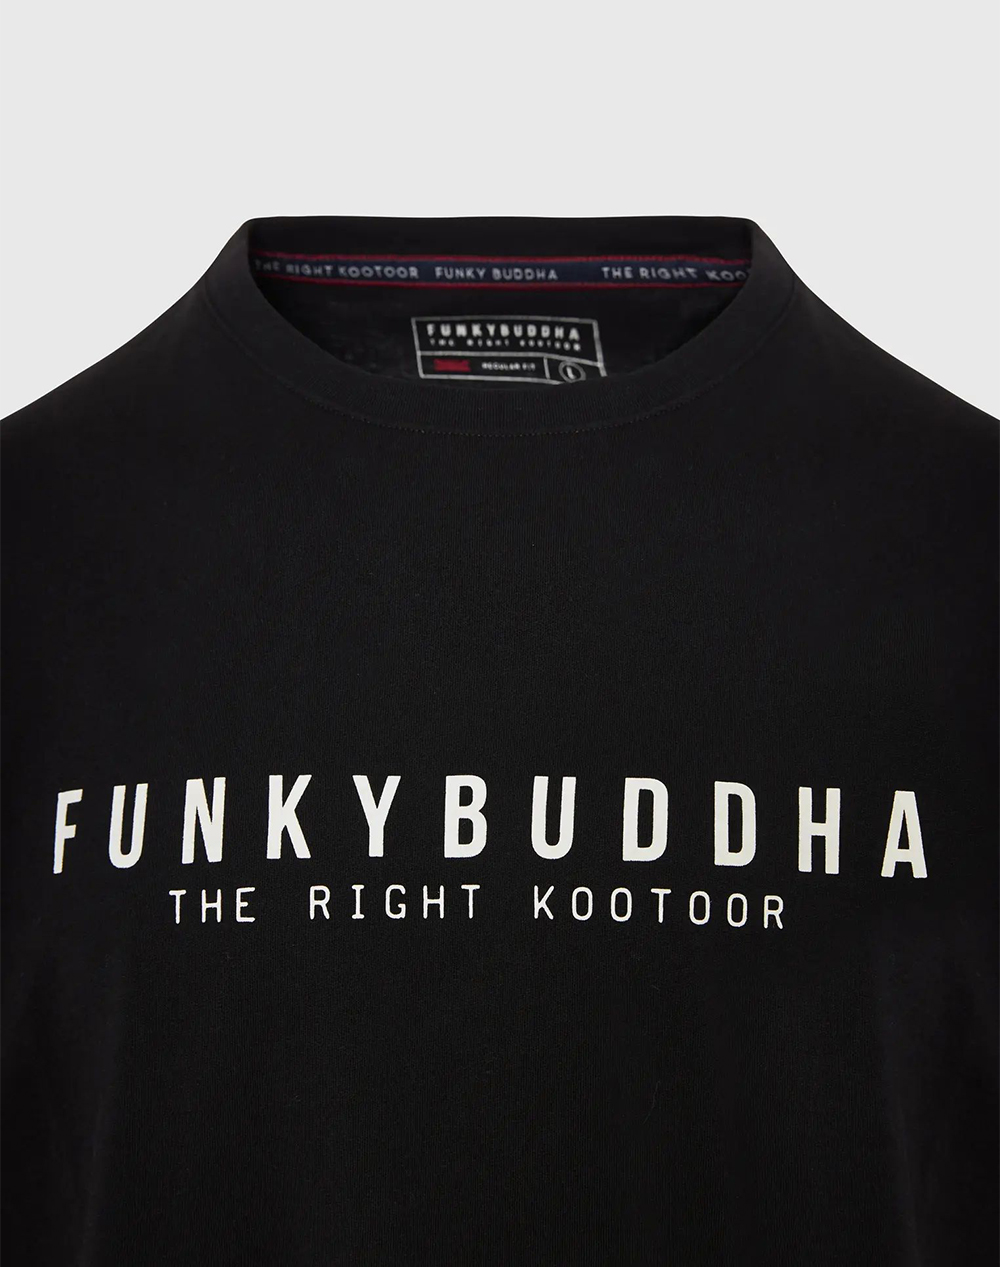 FUNKY BUDDHA T-shirt με Funky Buddha τύπωμα - The essentials